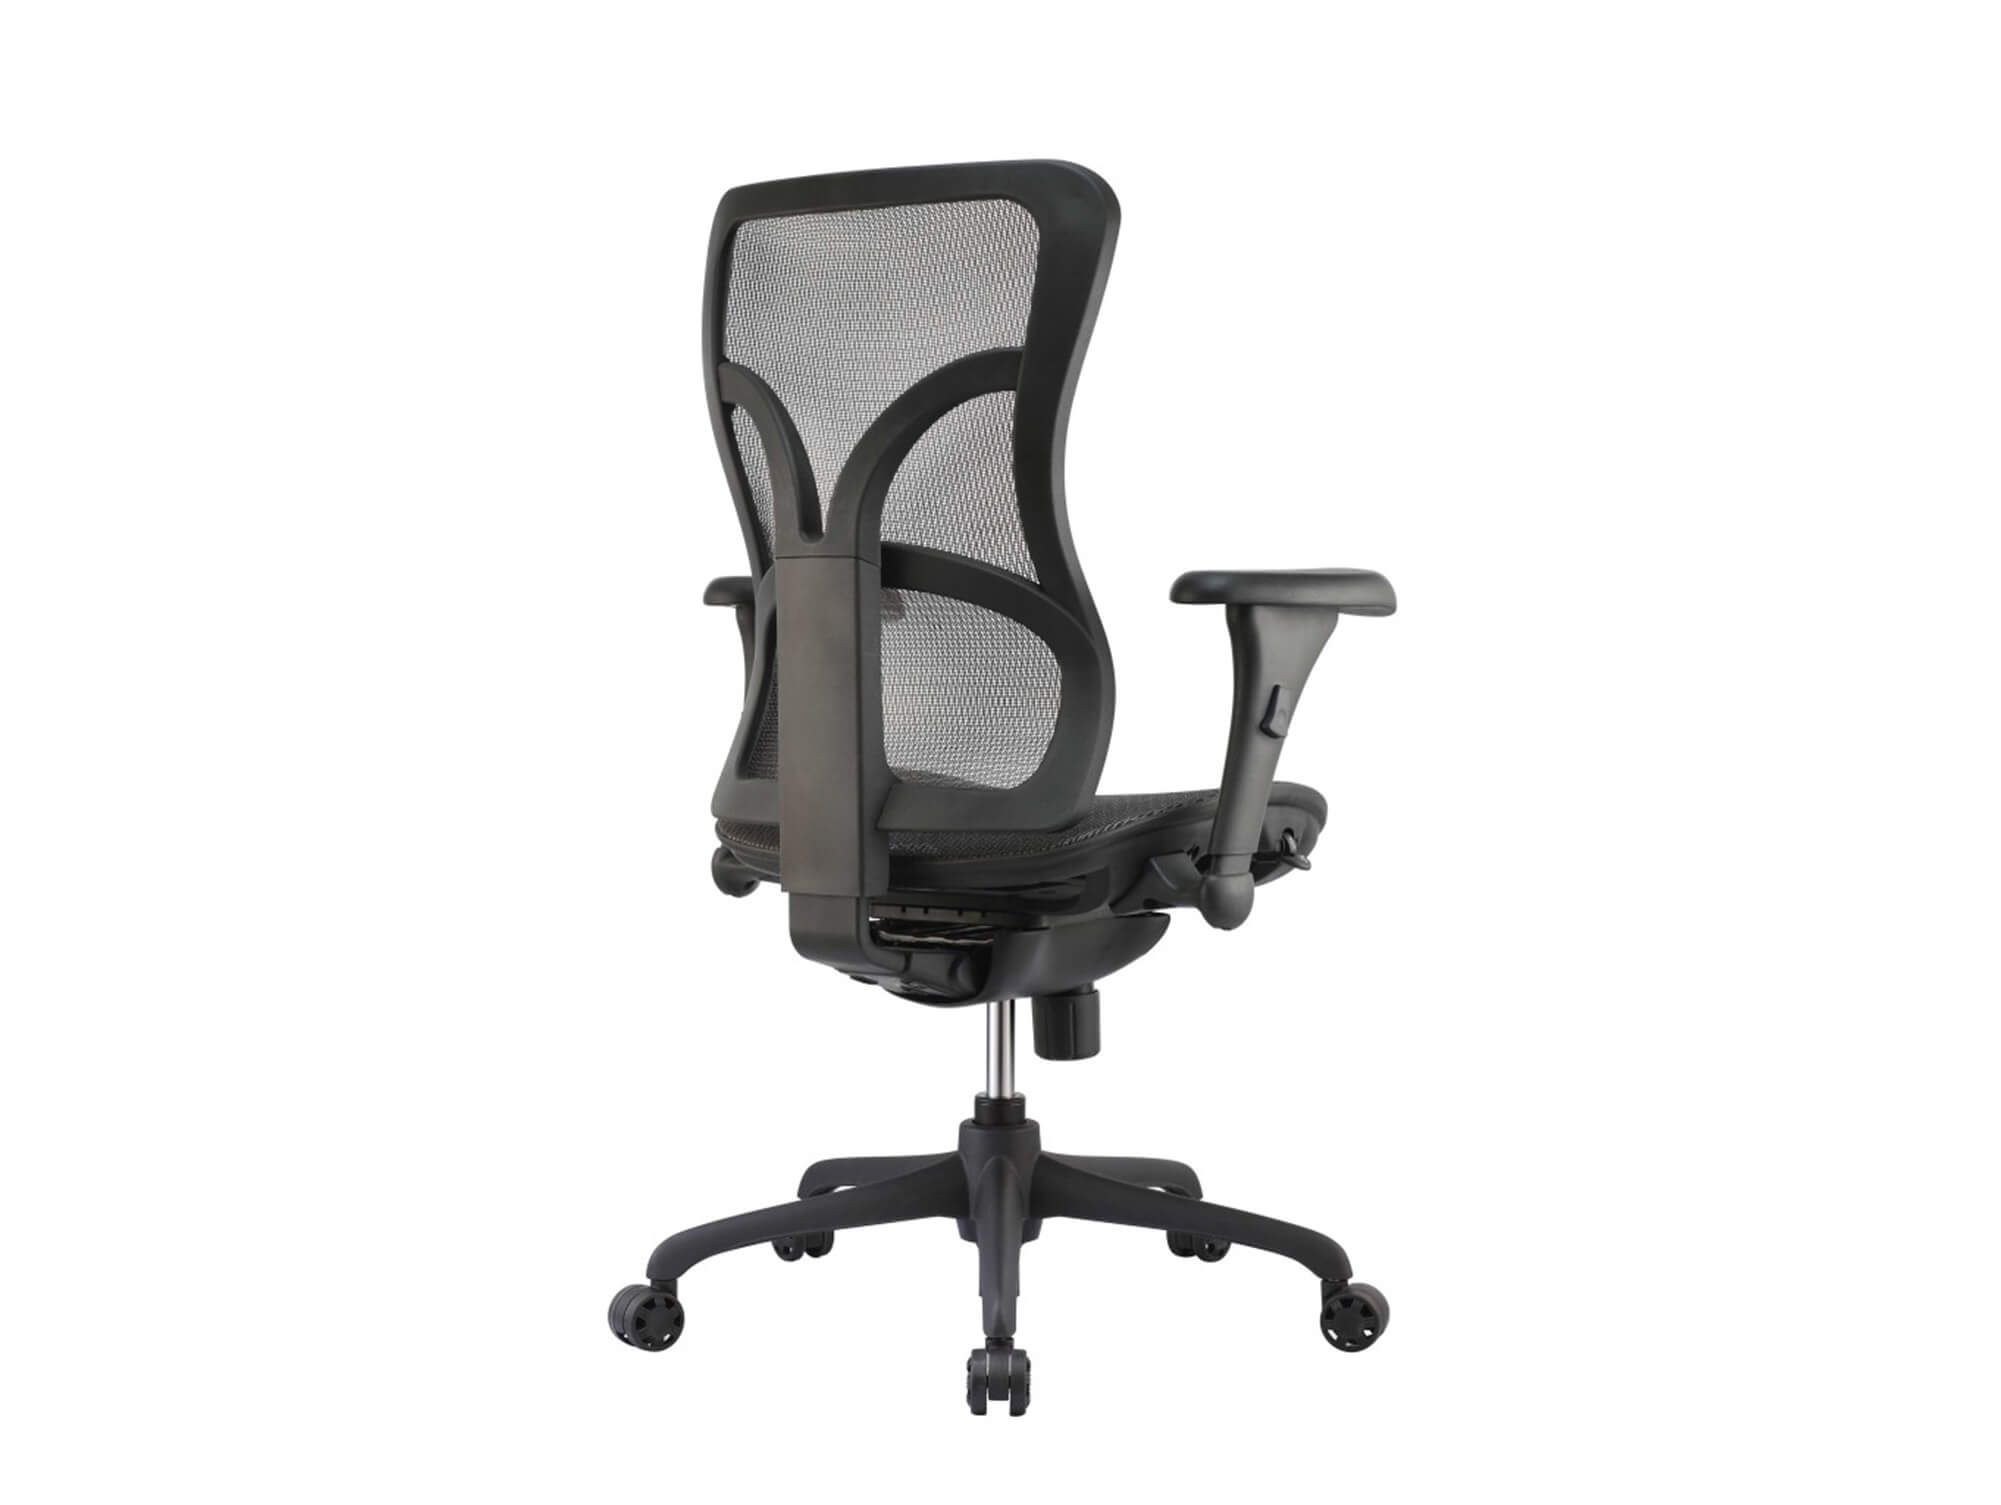 Adjustable office chair angle back